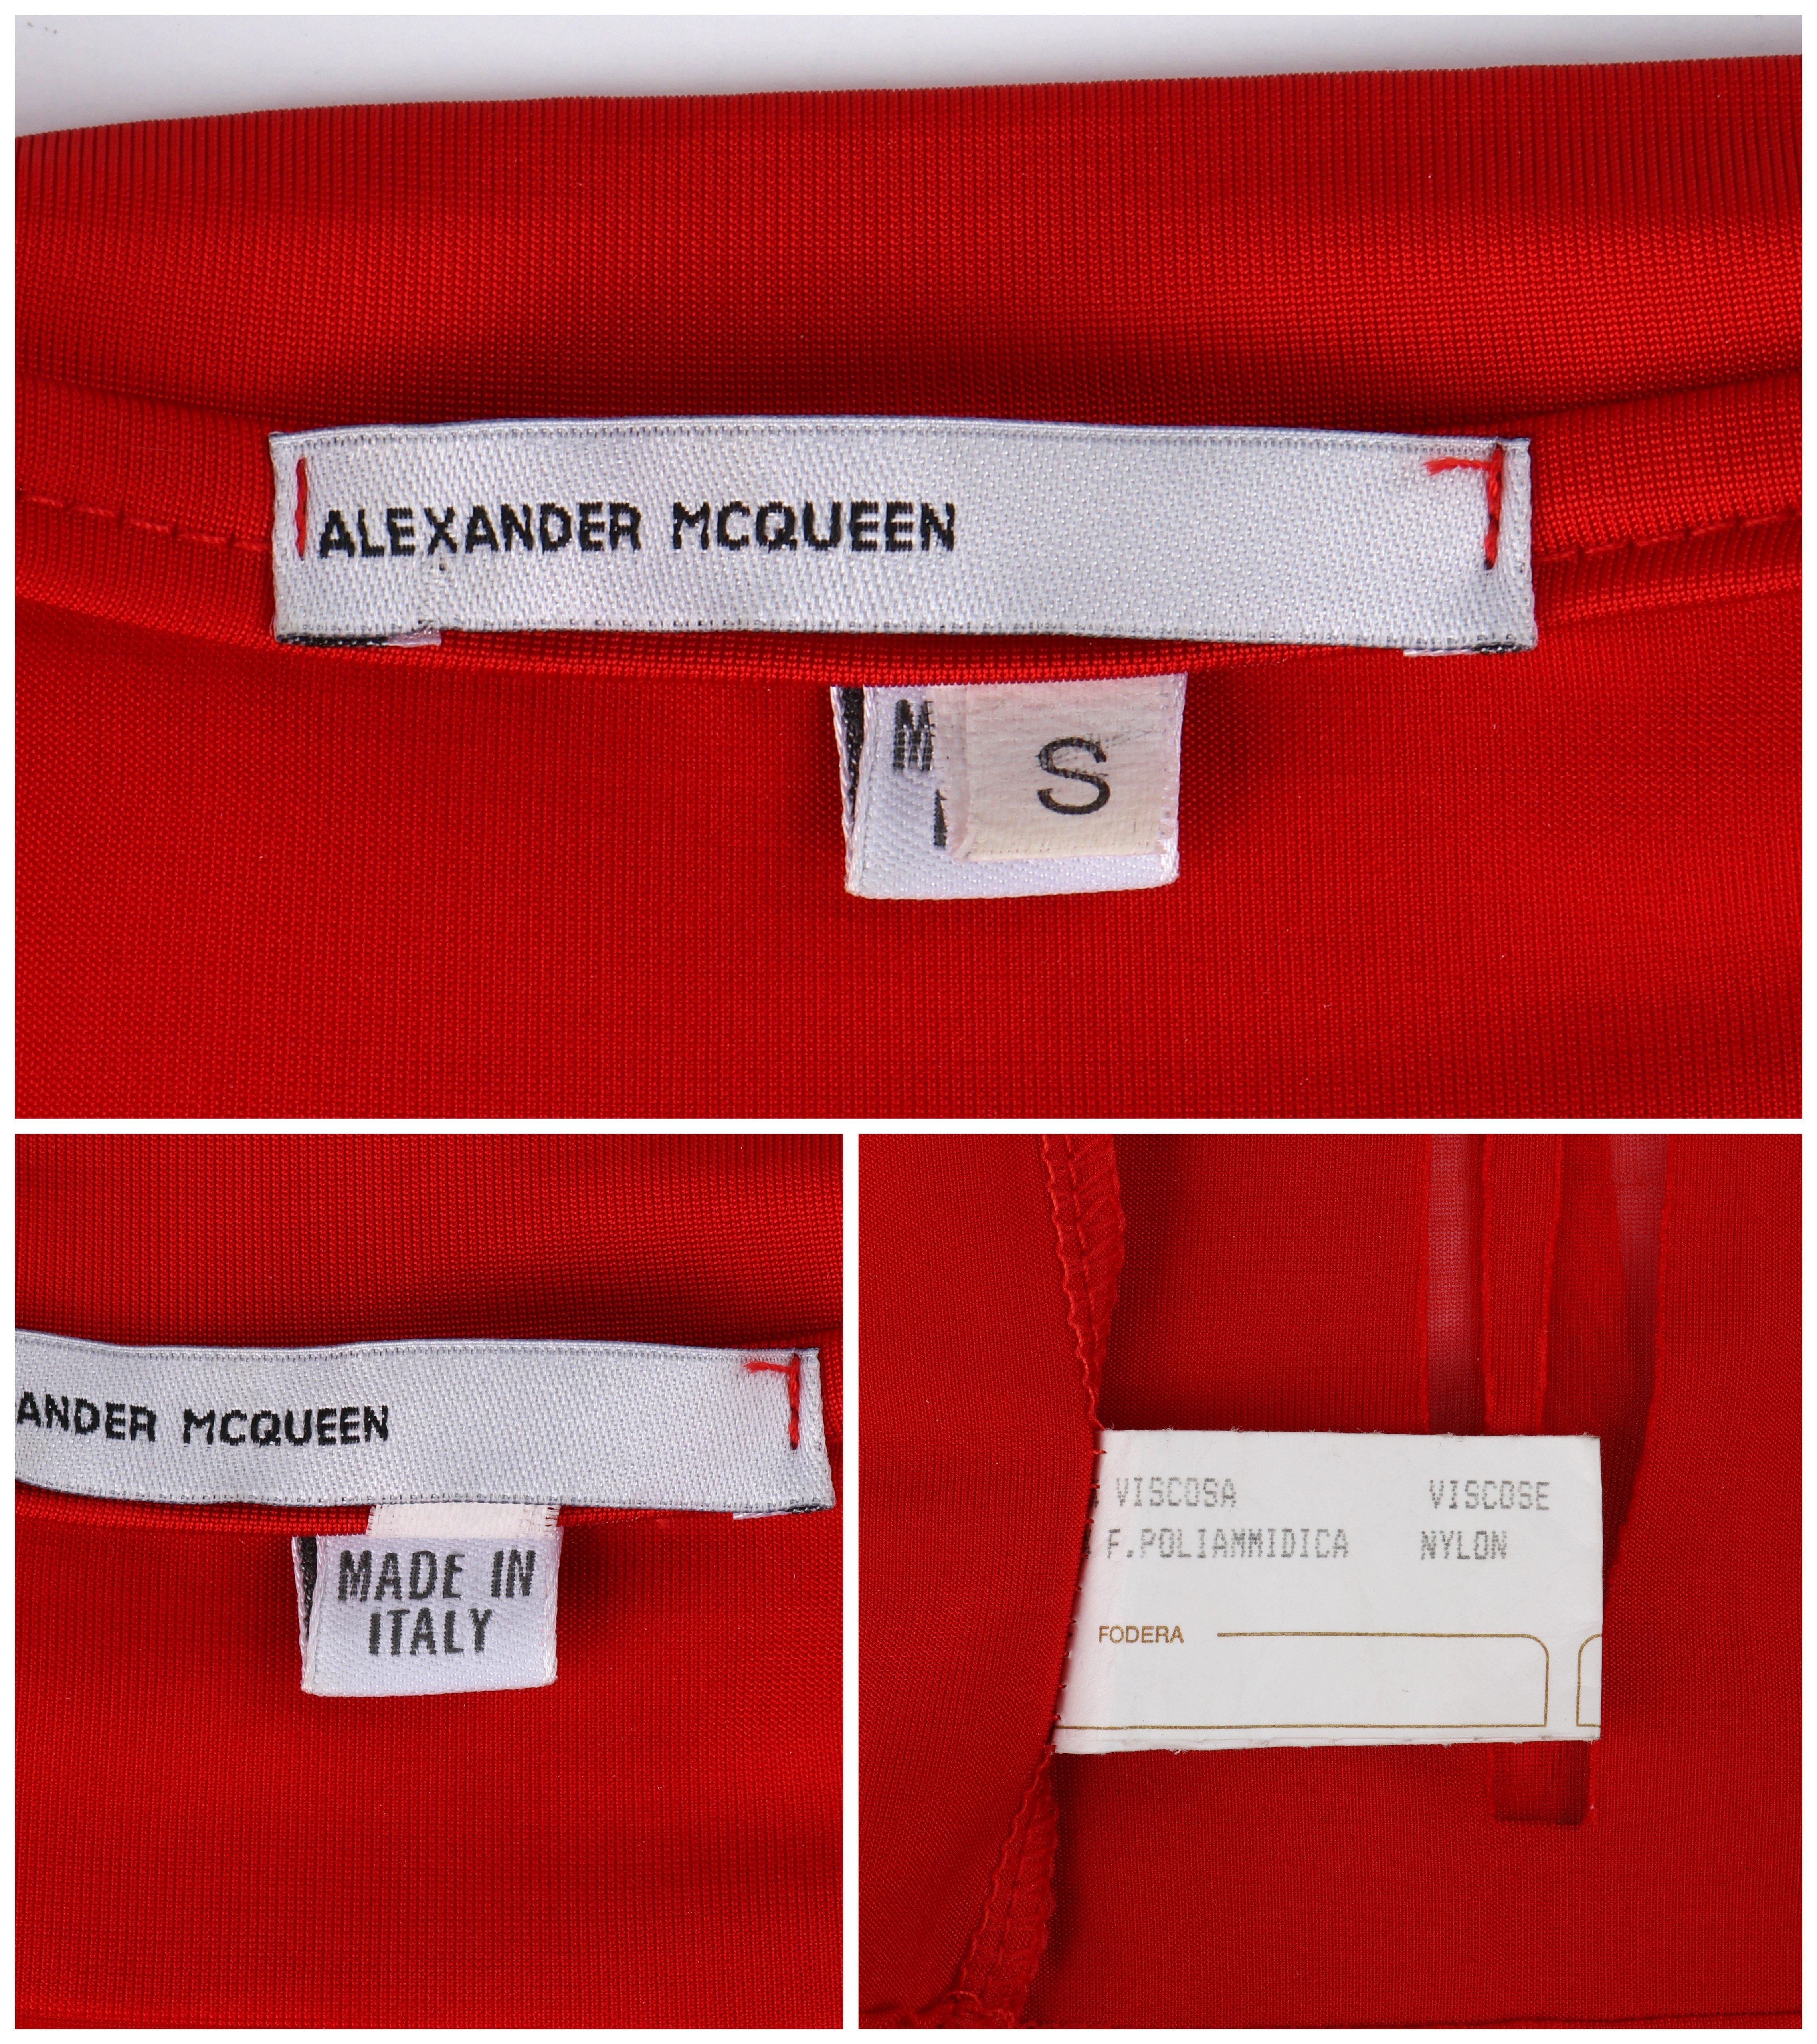 ALEXANDER McQUEEN S/S 1996 Red Semi Sheer Mesh Short Sleeve Shell Top For Sale 4